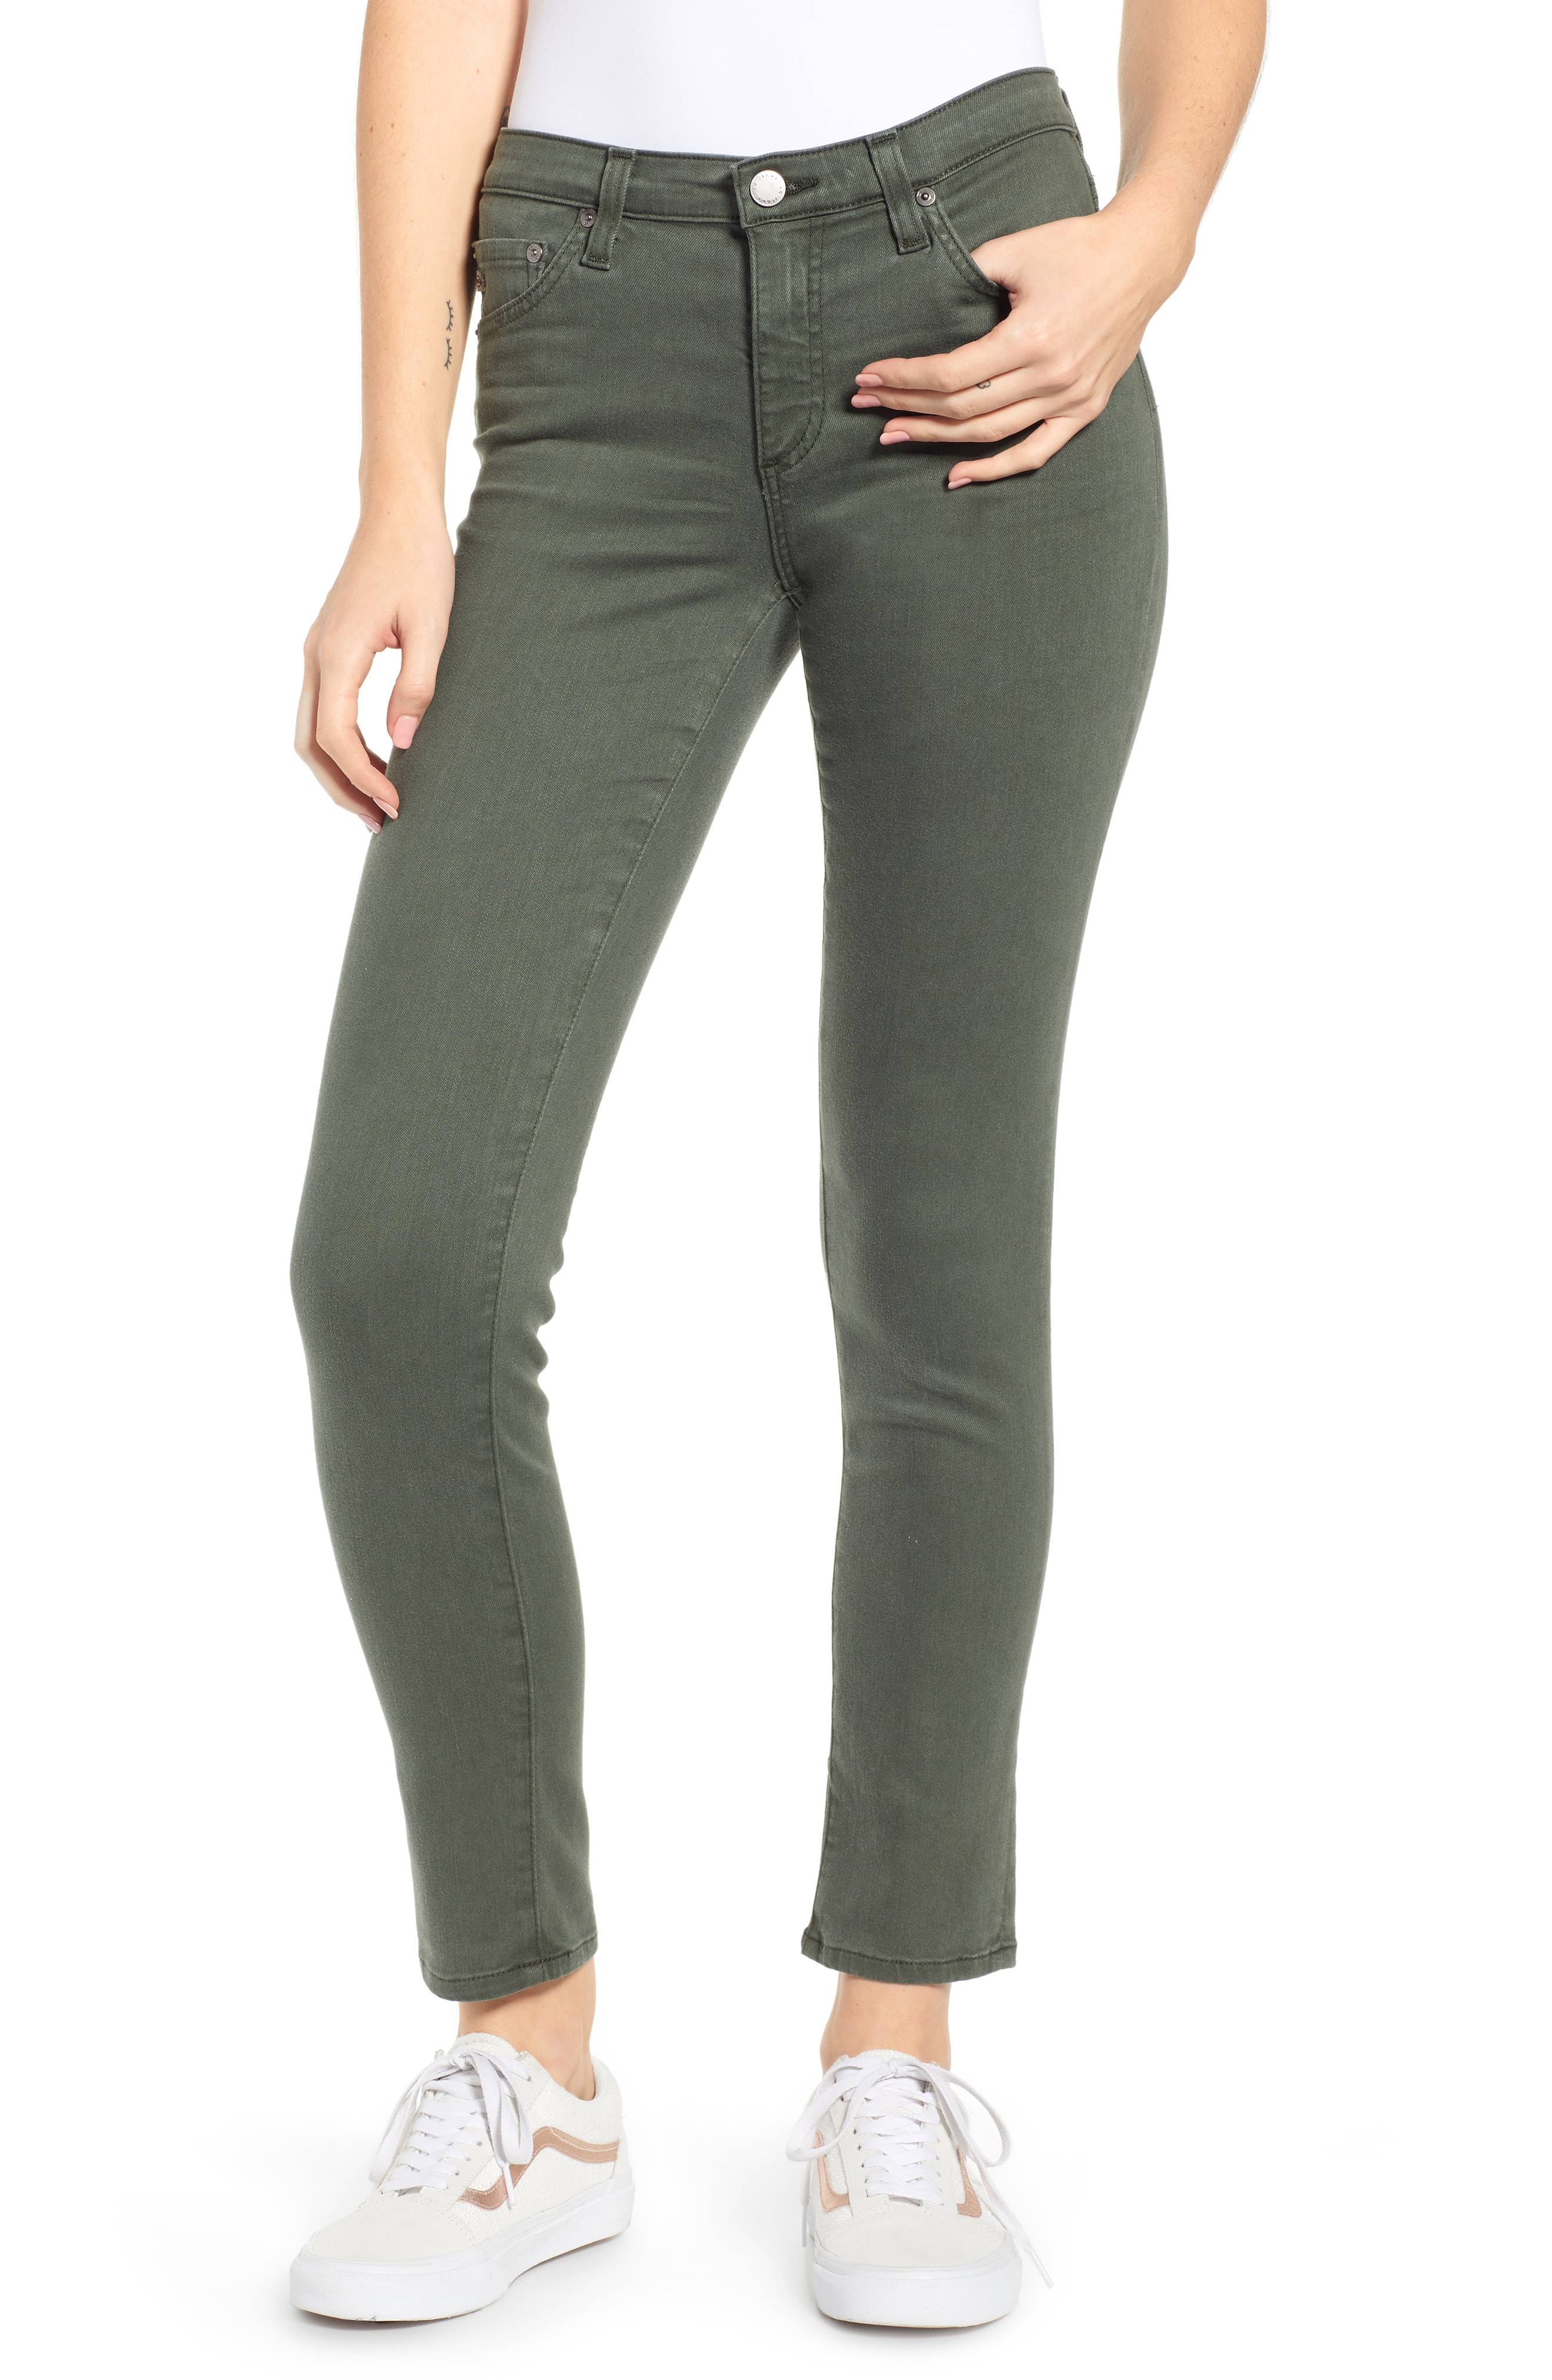 green jeans | Nordstrom